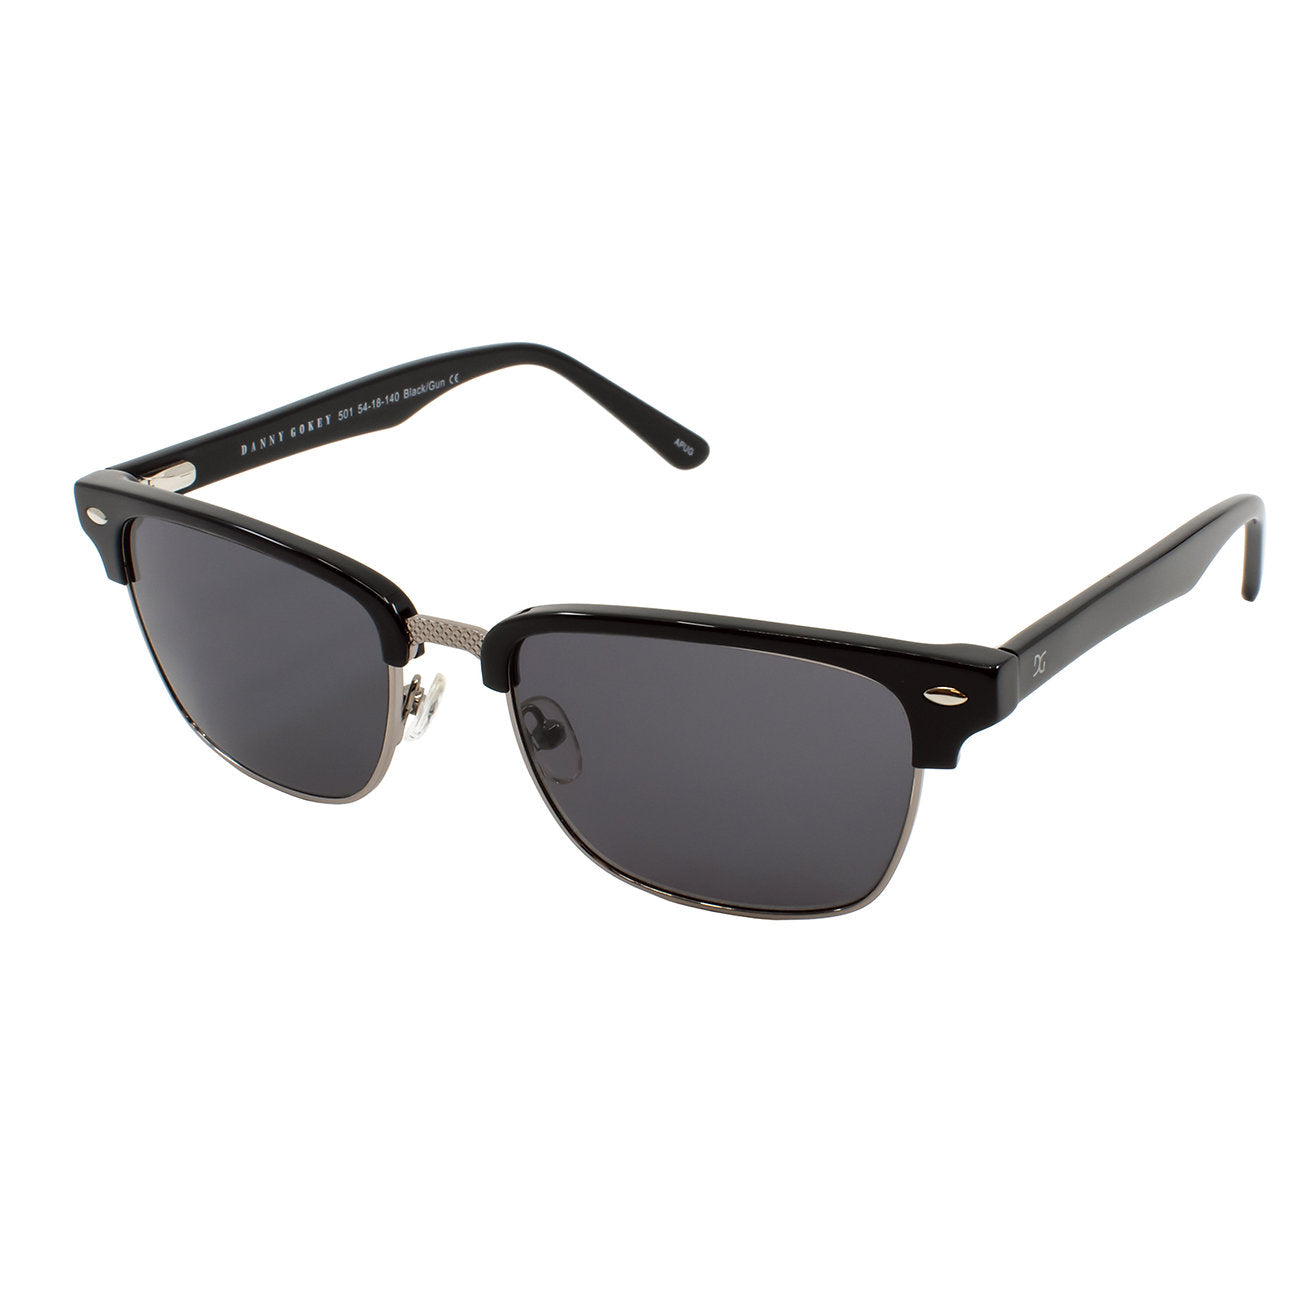 Danny Gokey sunglasses model 501 black gun